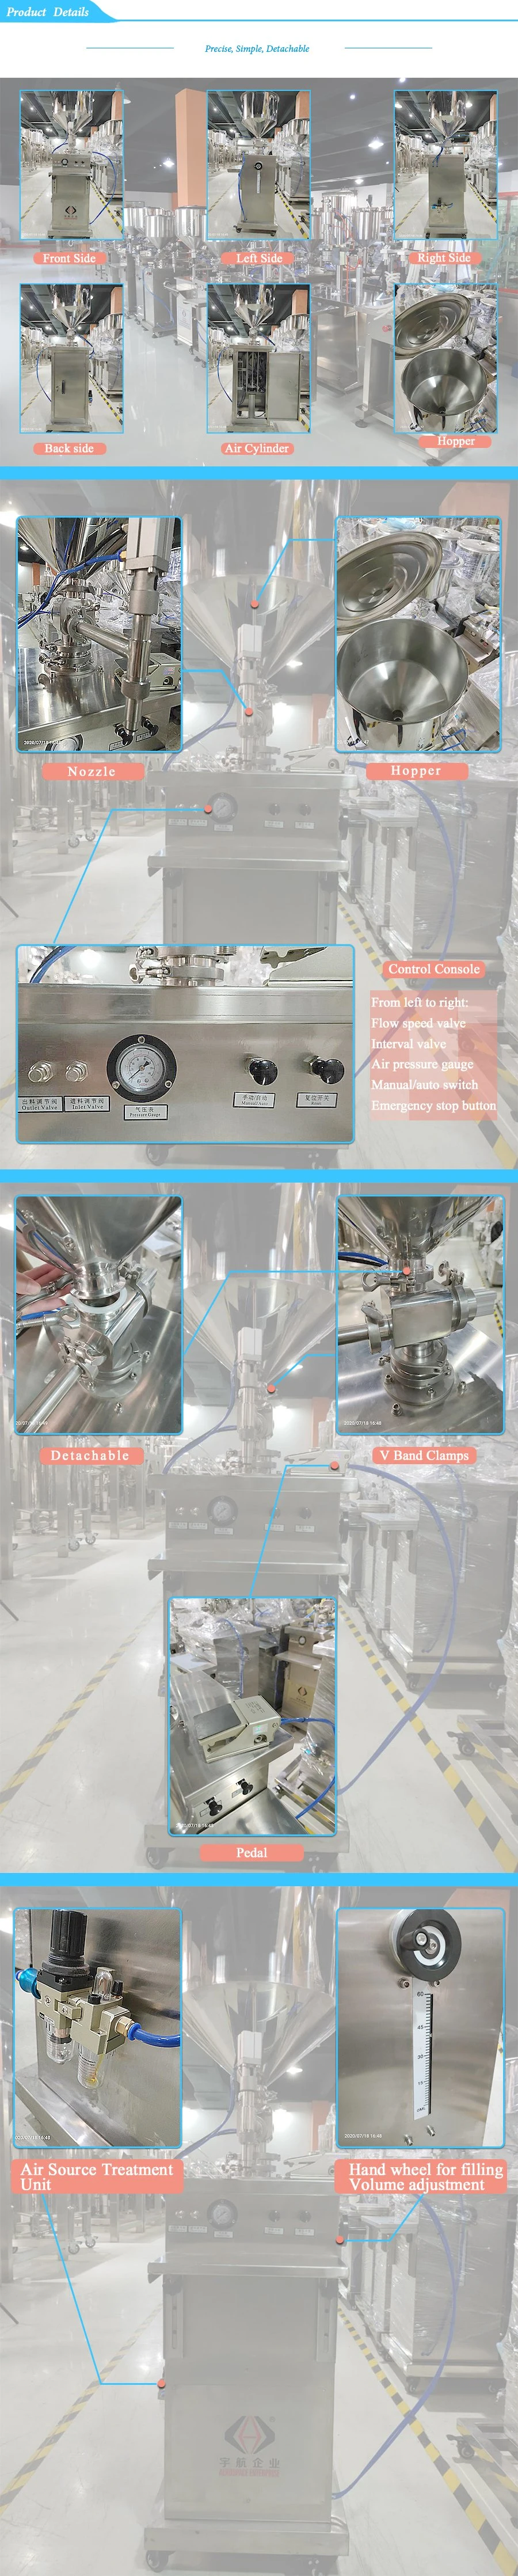 Single Paste Filling Machine, Factory Price Small Semi Automatic Pneumatic Liquid Filling Machine